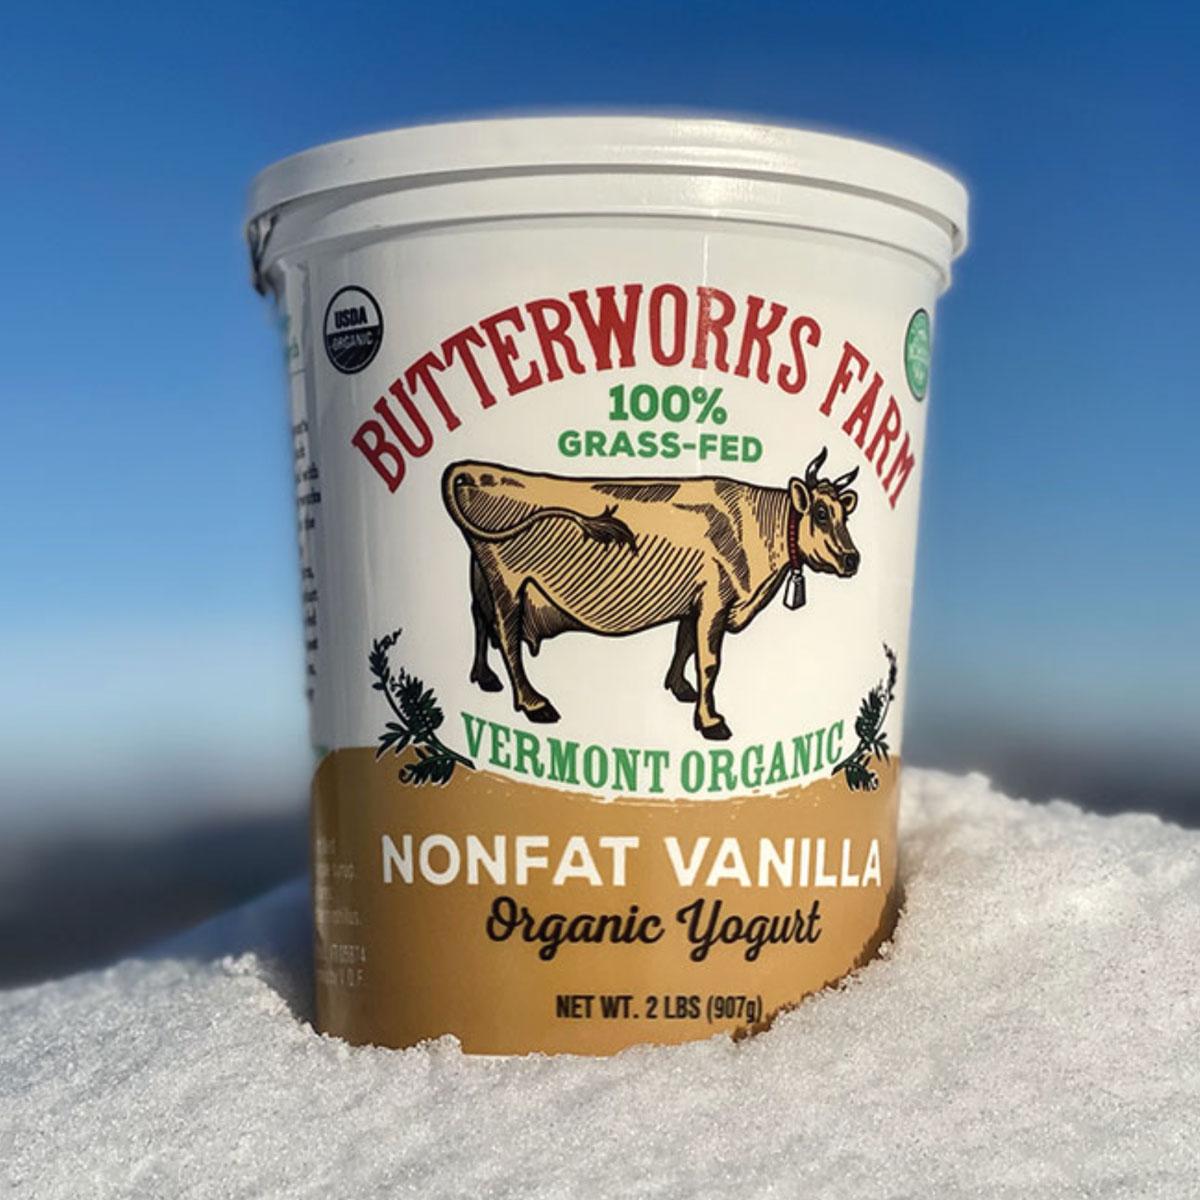 Butterworks nonfat vanilla yogurt